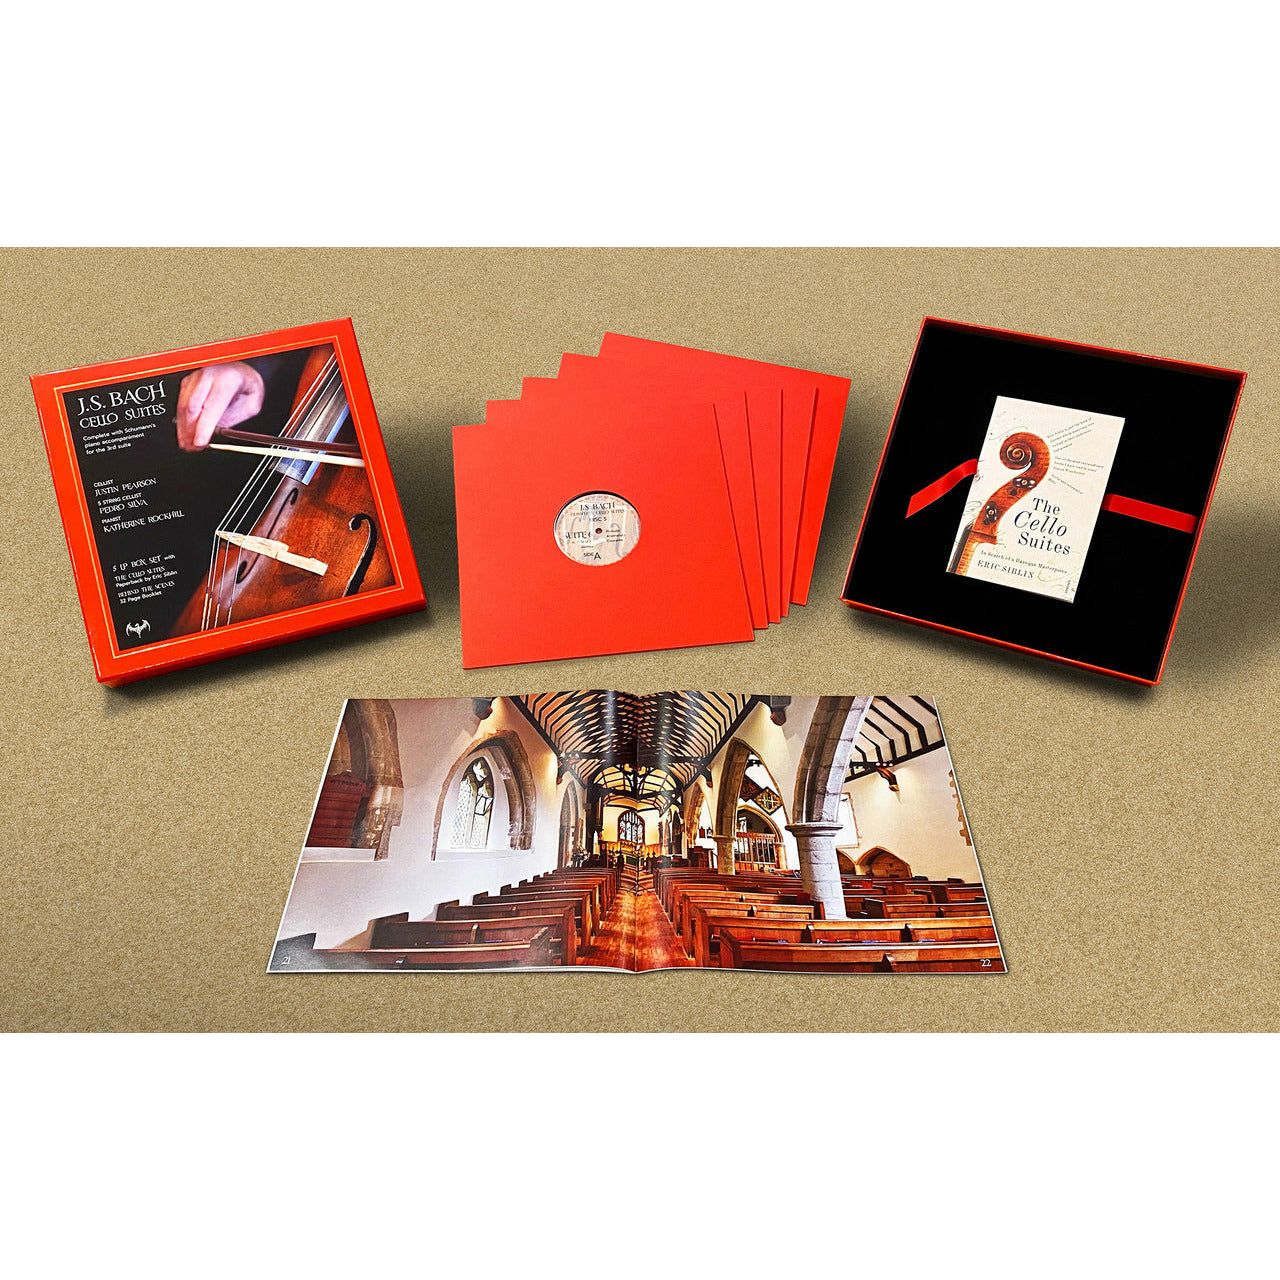 Justin Pearson, Pedro Silva und Katherine Rockhill – JS Bach Cello-Suiten – LP-Box-Set